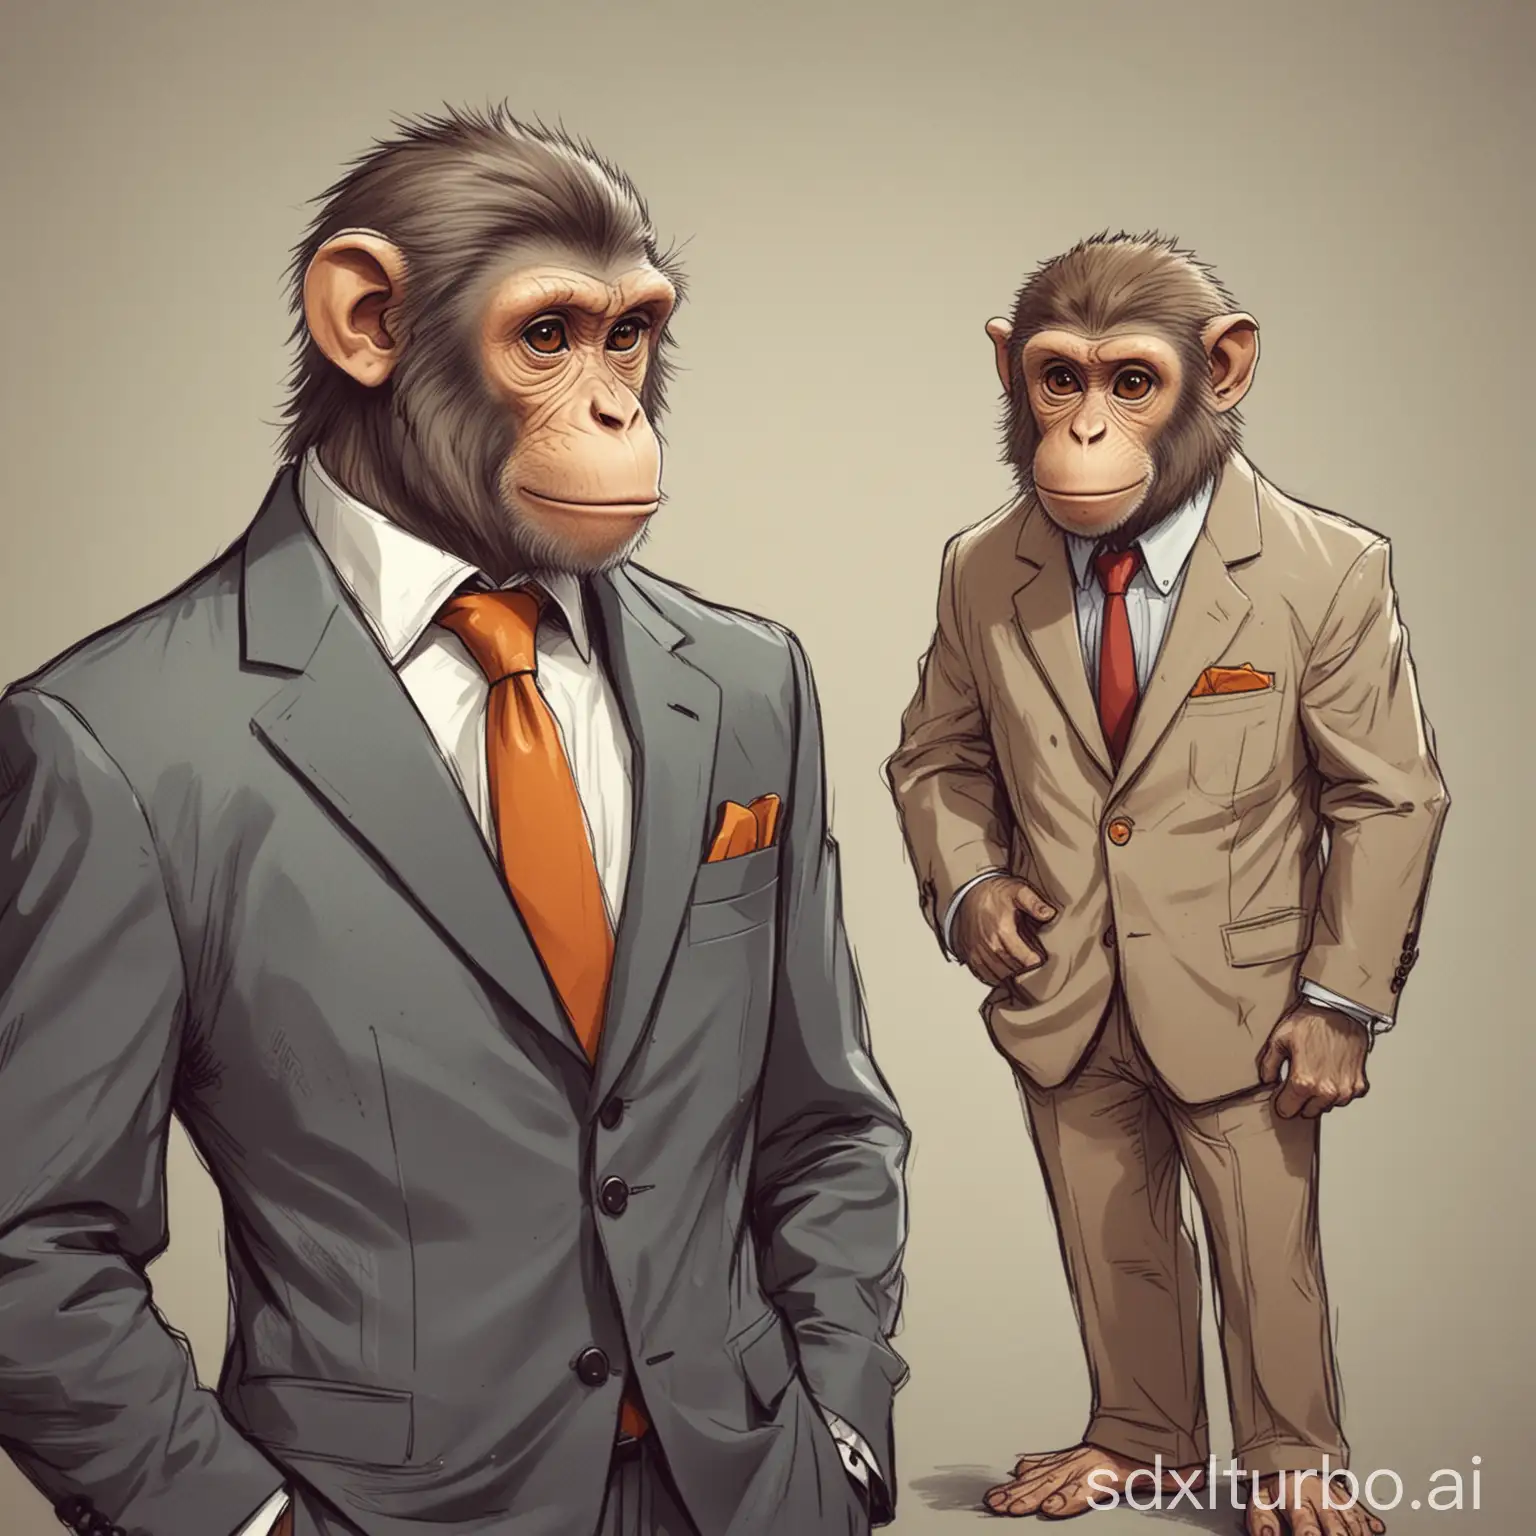 Curious-Monkey-Observes-Suited-Man-Playful-Cartoon-Illustration